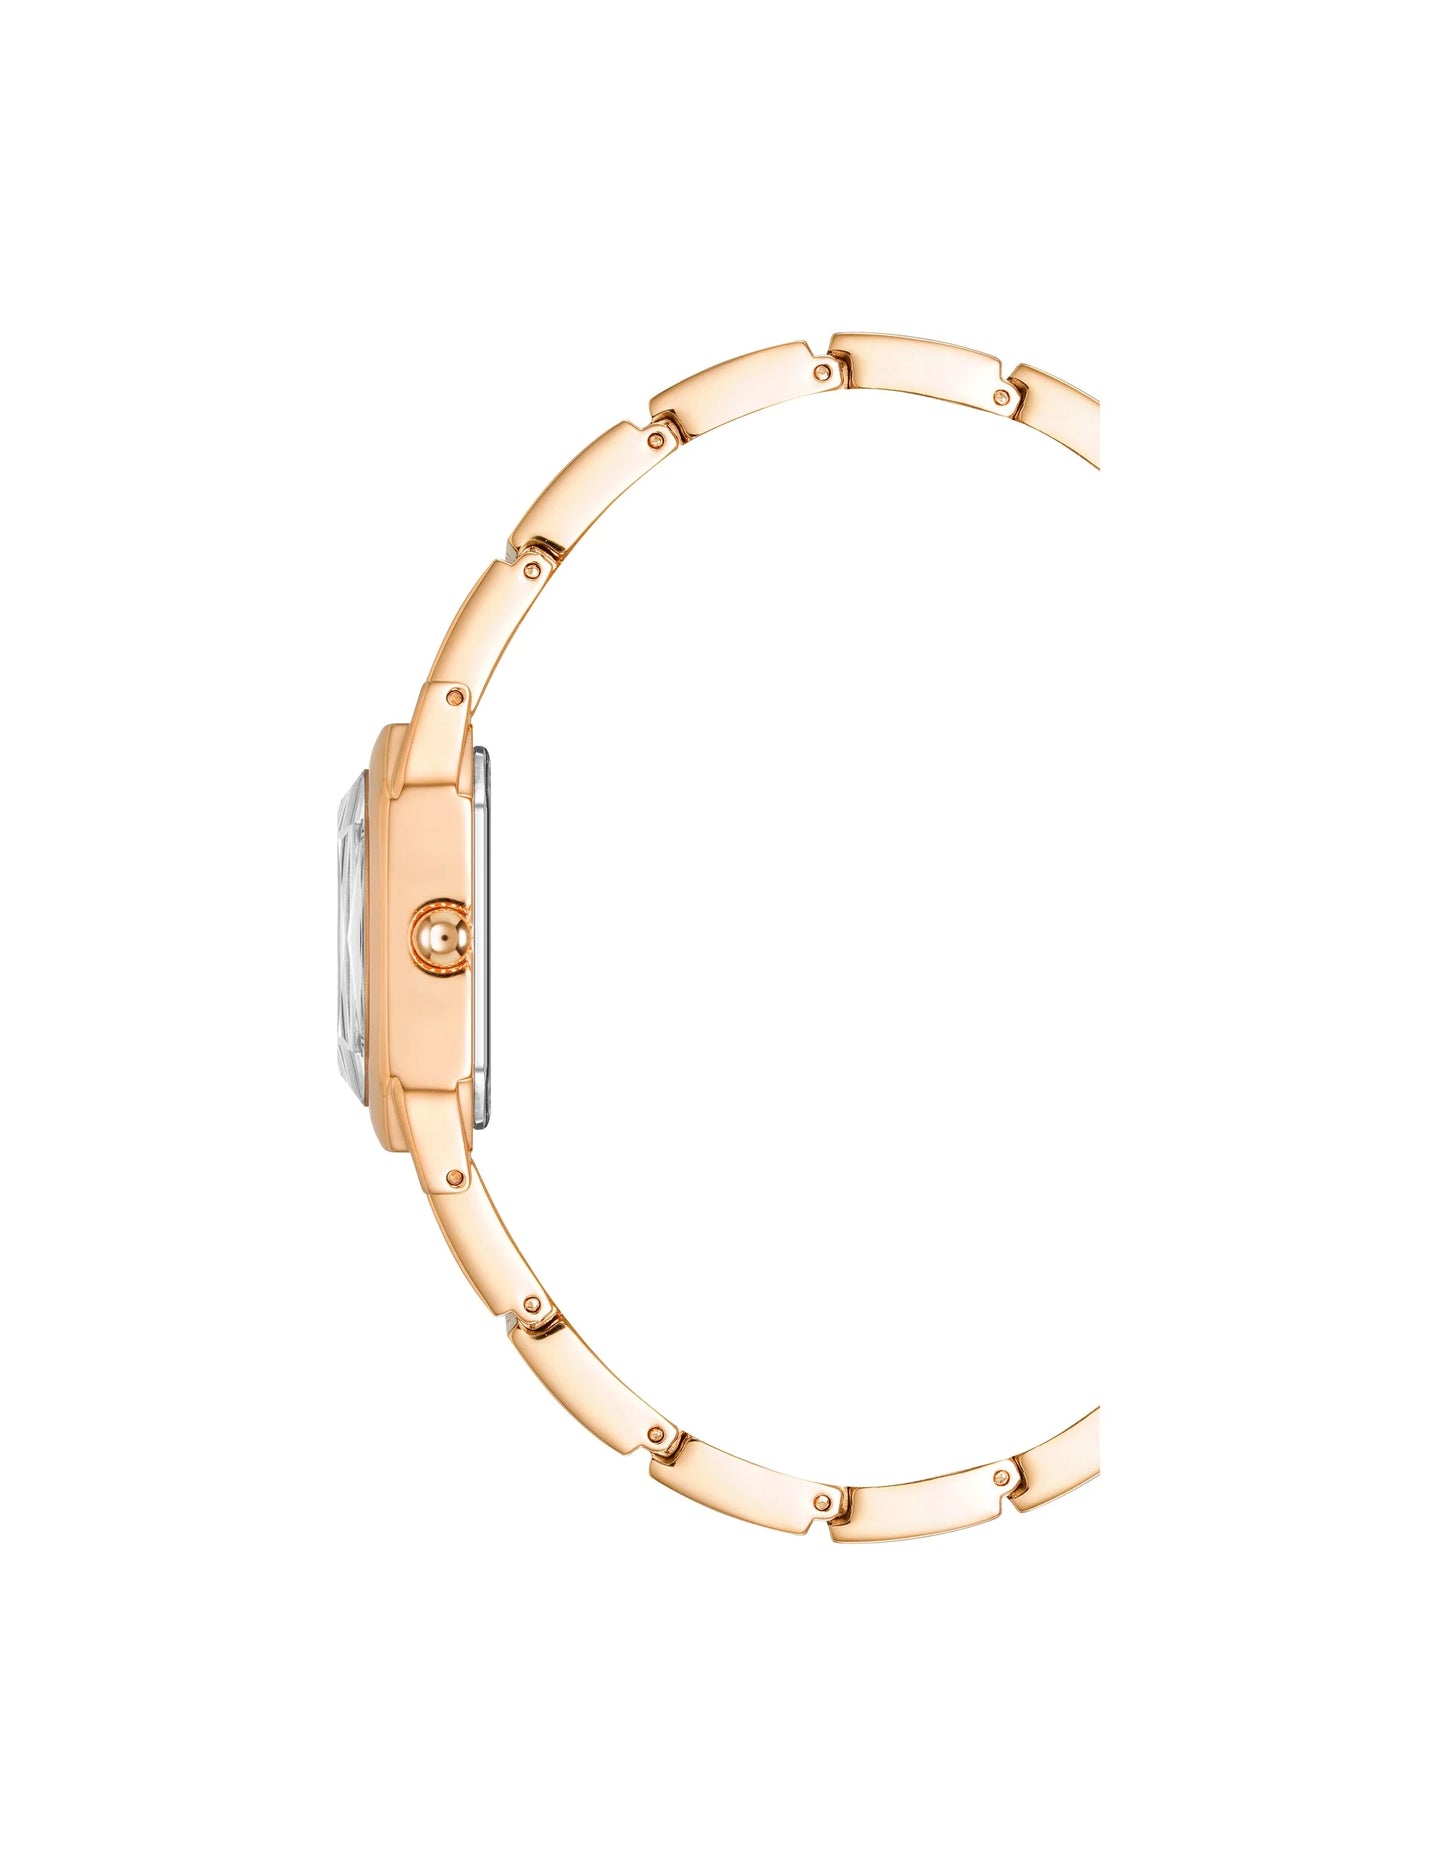 Iconic Octagonal Crystal Bracelet Watch AK4090RGRG